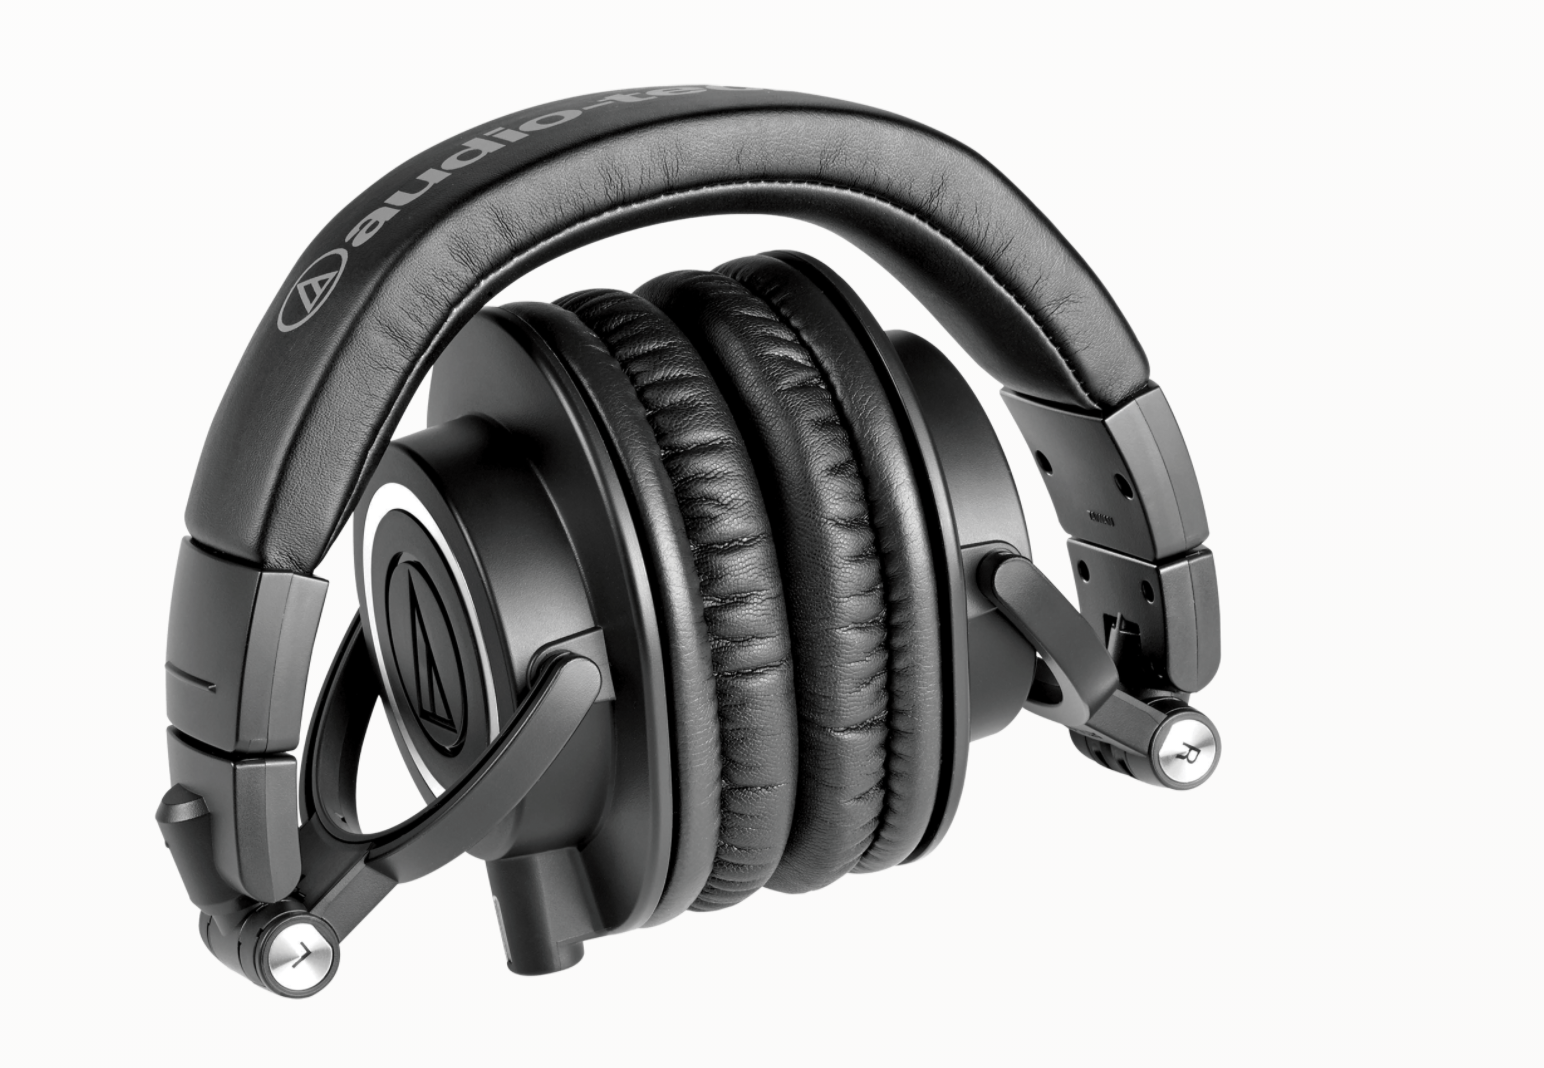 Audio-Technica ATH-M50x Studio Headphones (Black)